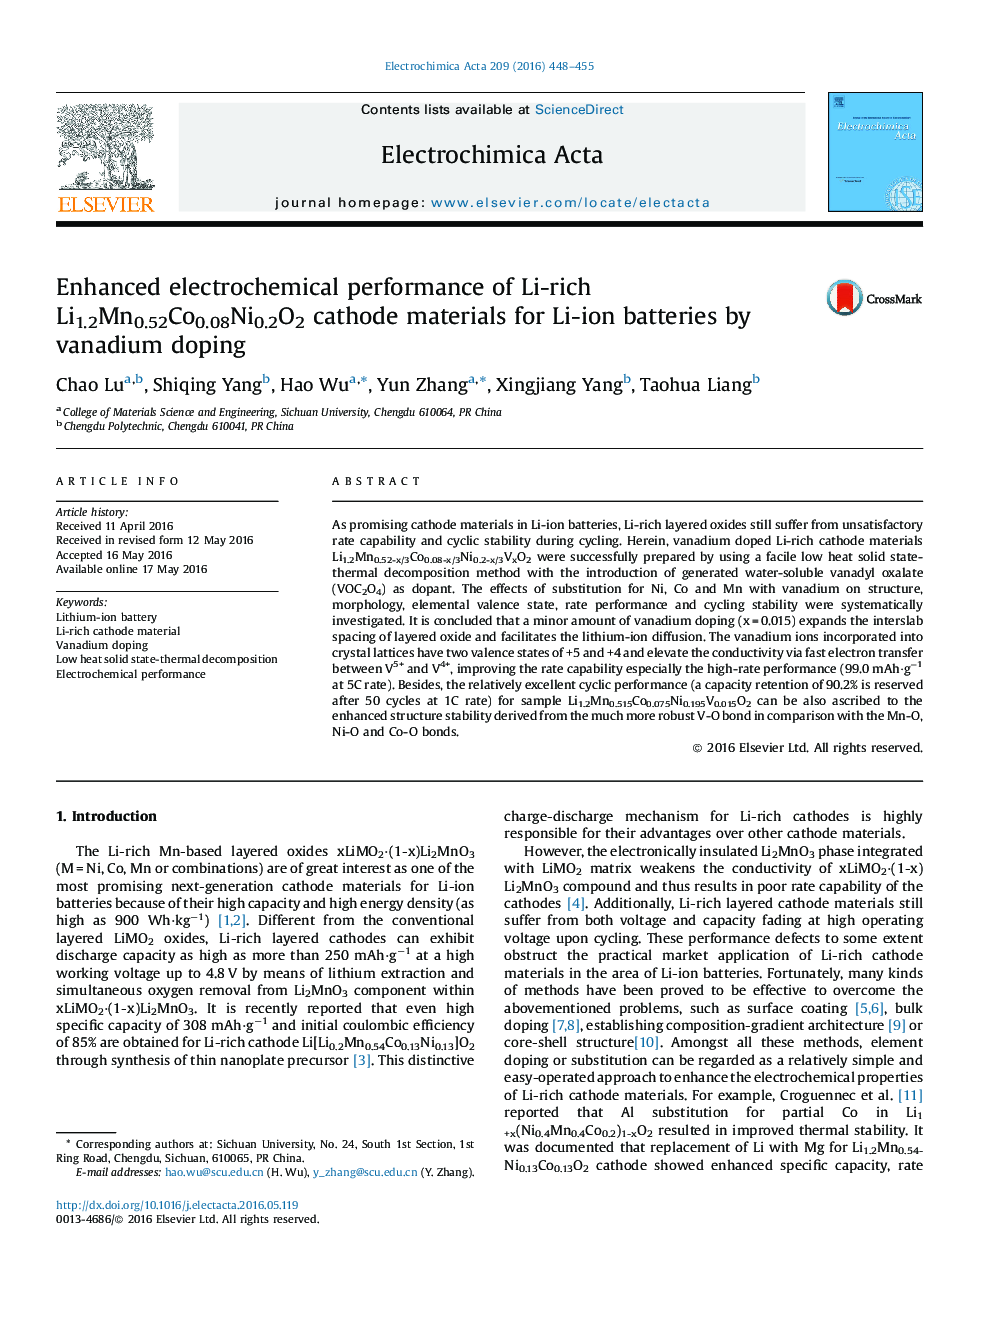 Enhanced electrochemical performance of Li-rich Li1.2Mn0.52Co0.08Ni0.2O2 cathode materials for Li-ion batteries by vanadium doping